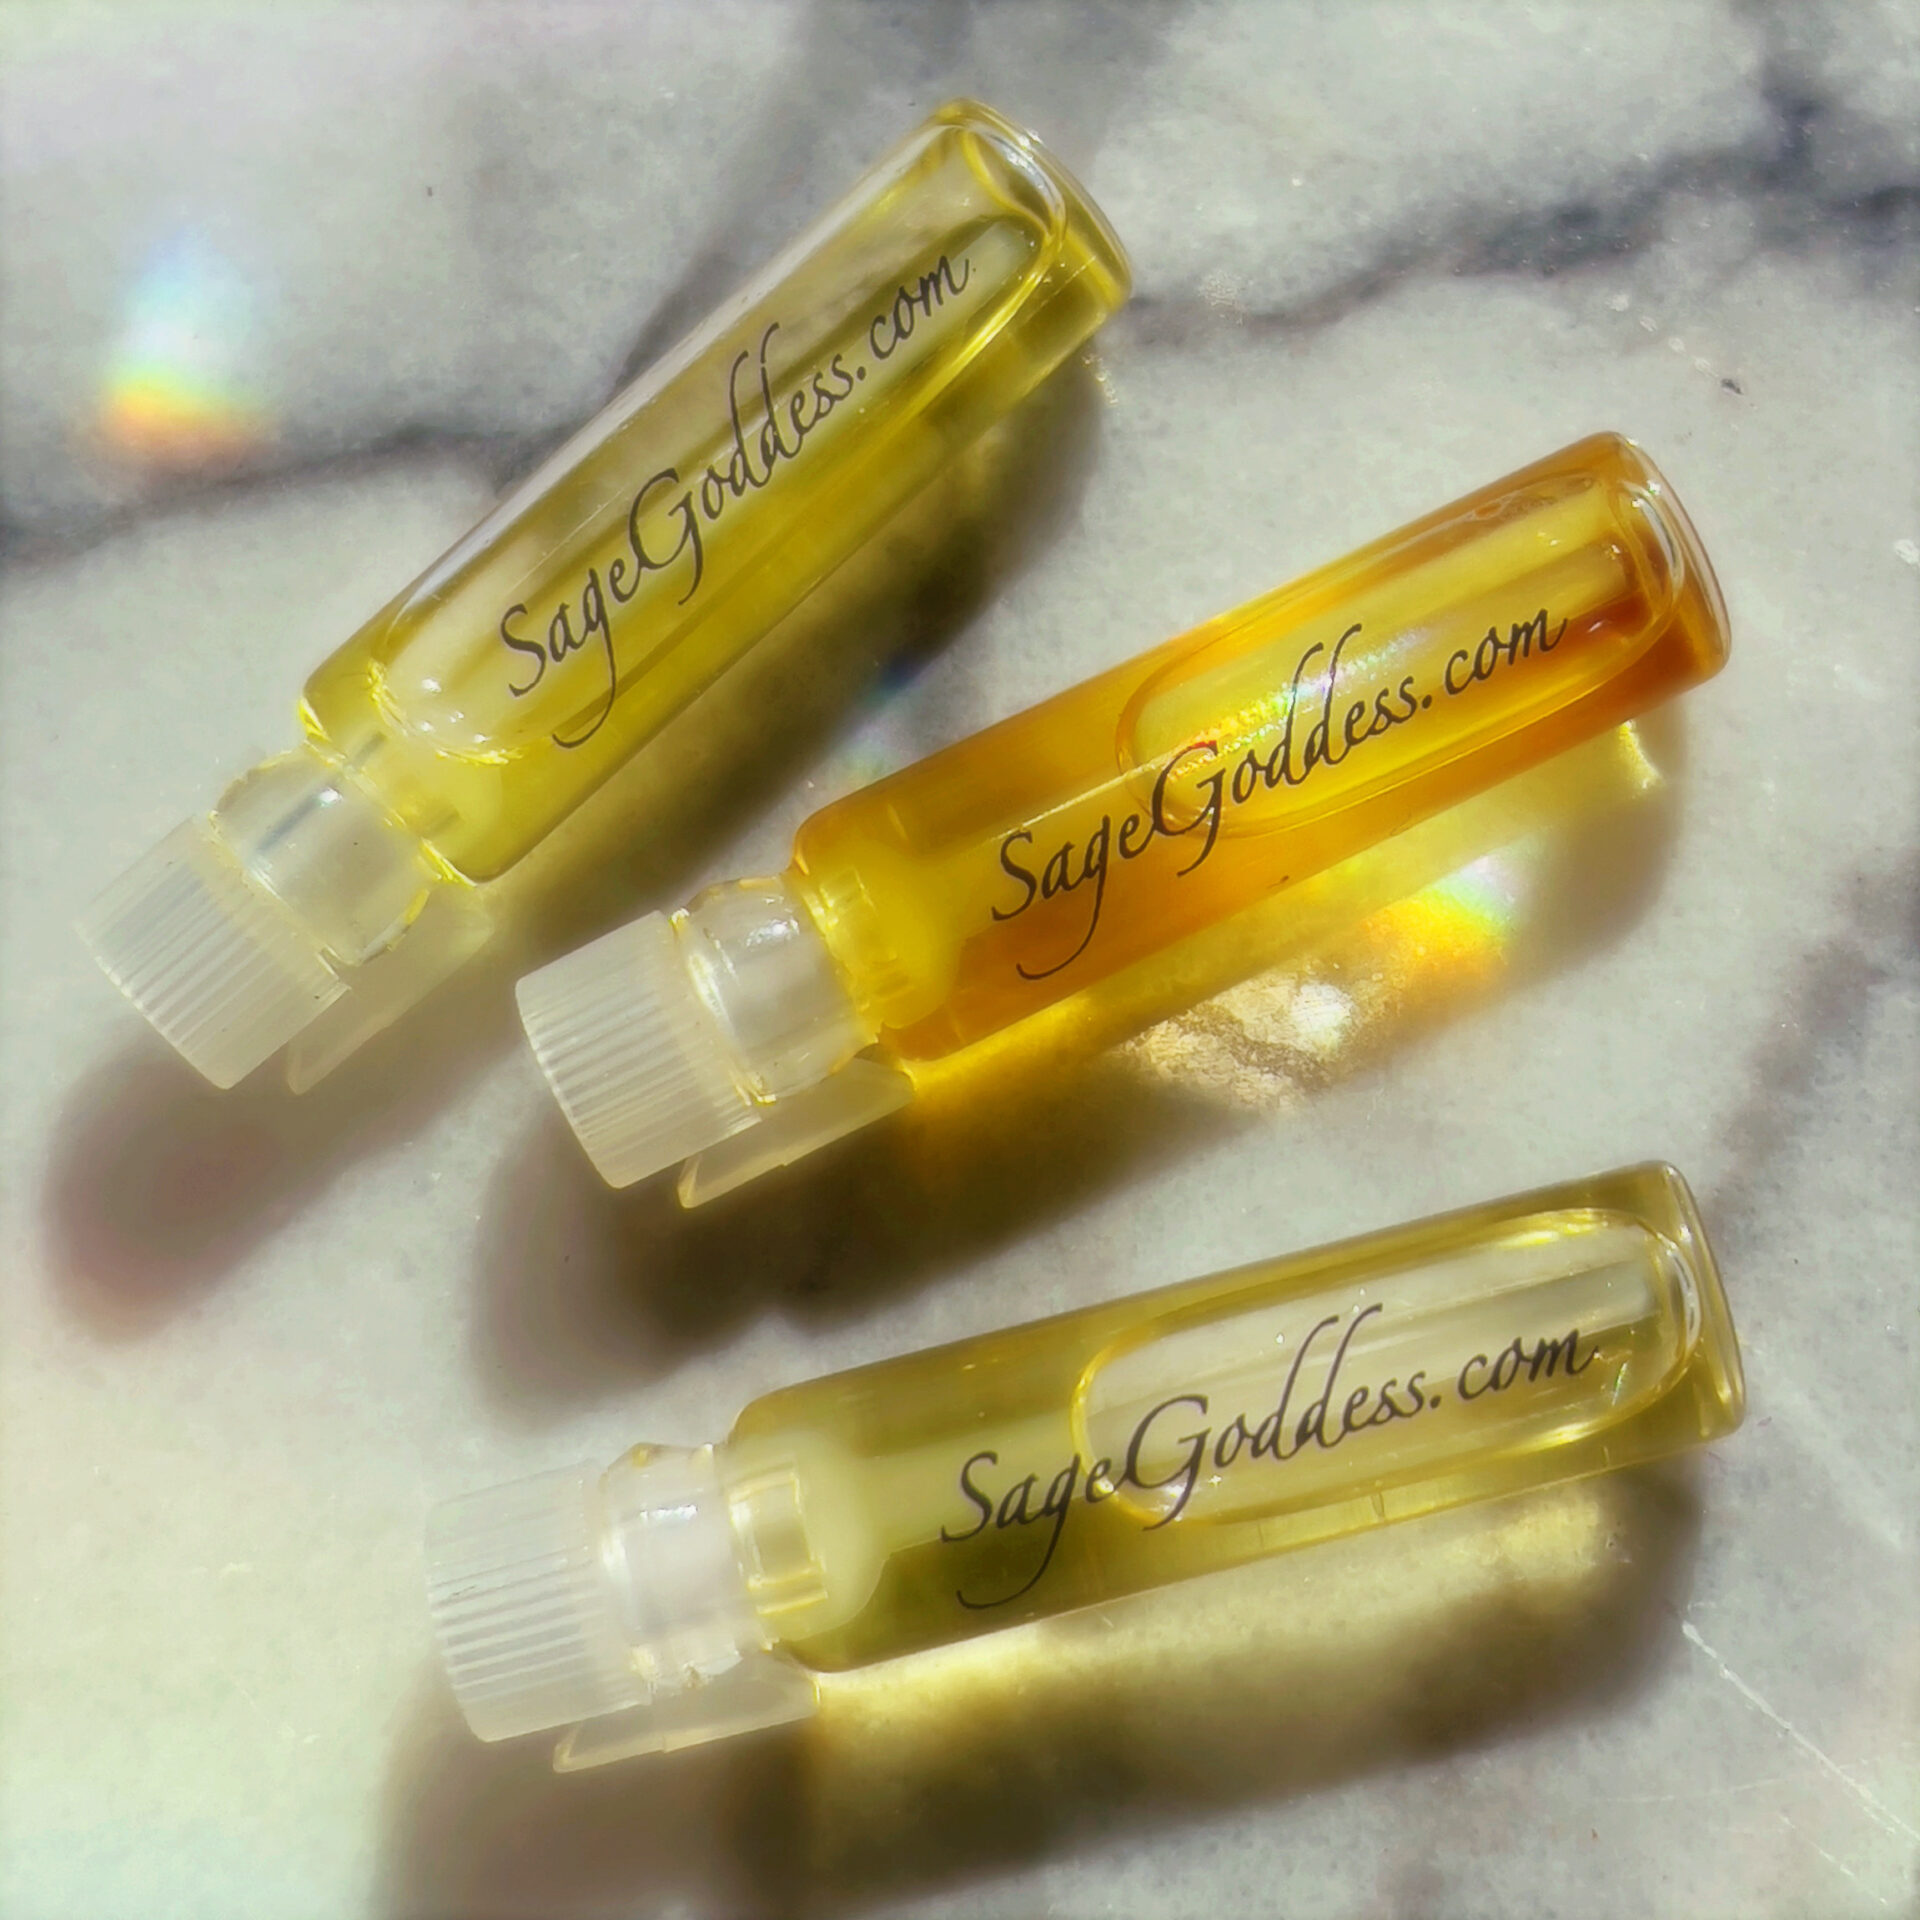 Sage Goddess Perfume Sample Trio for finding your fragrance